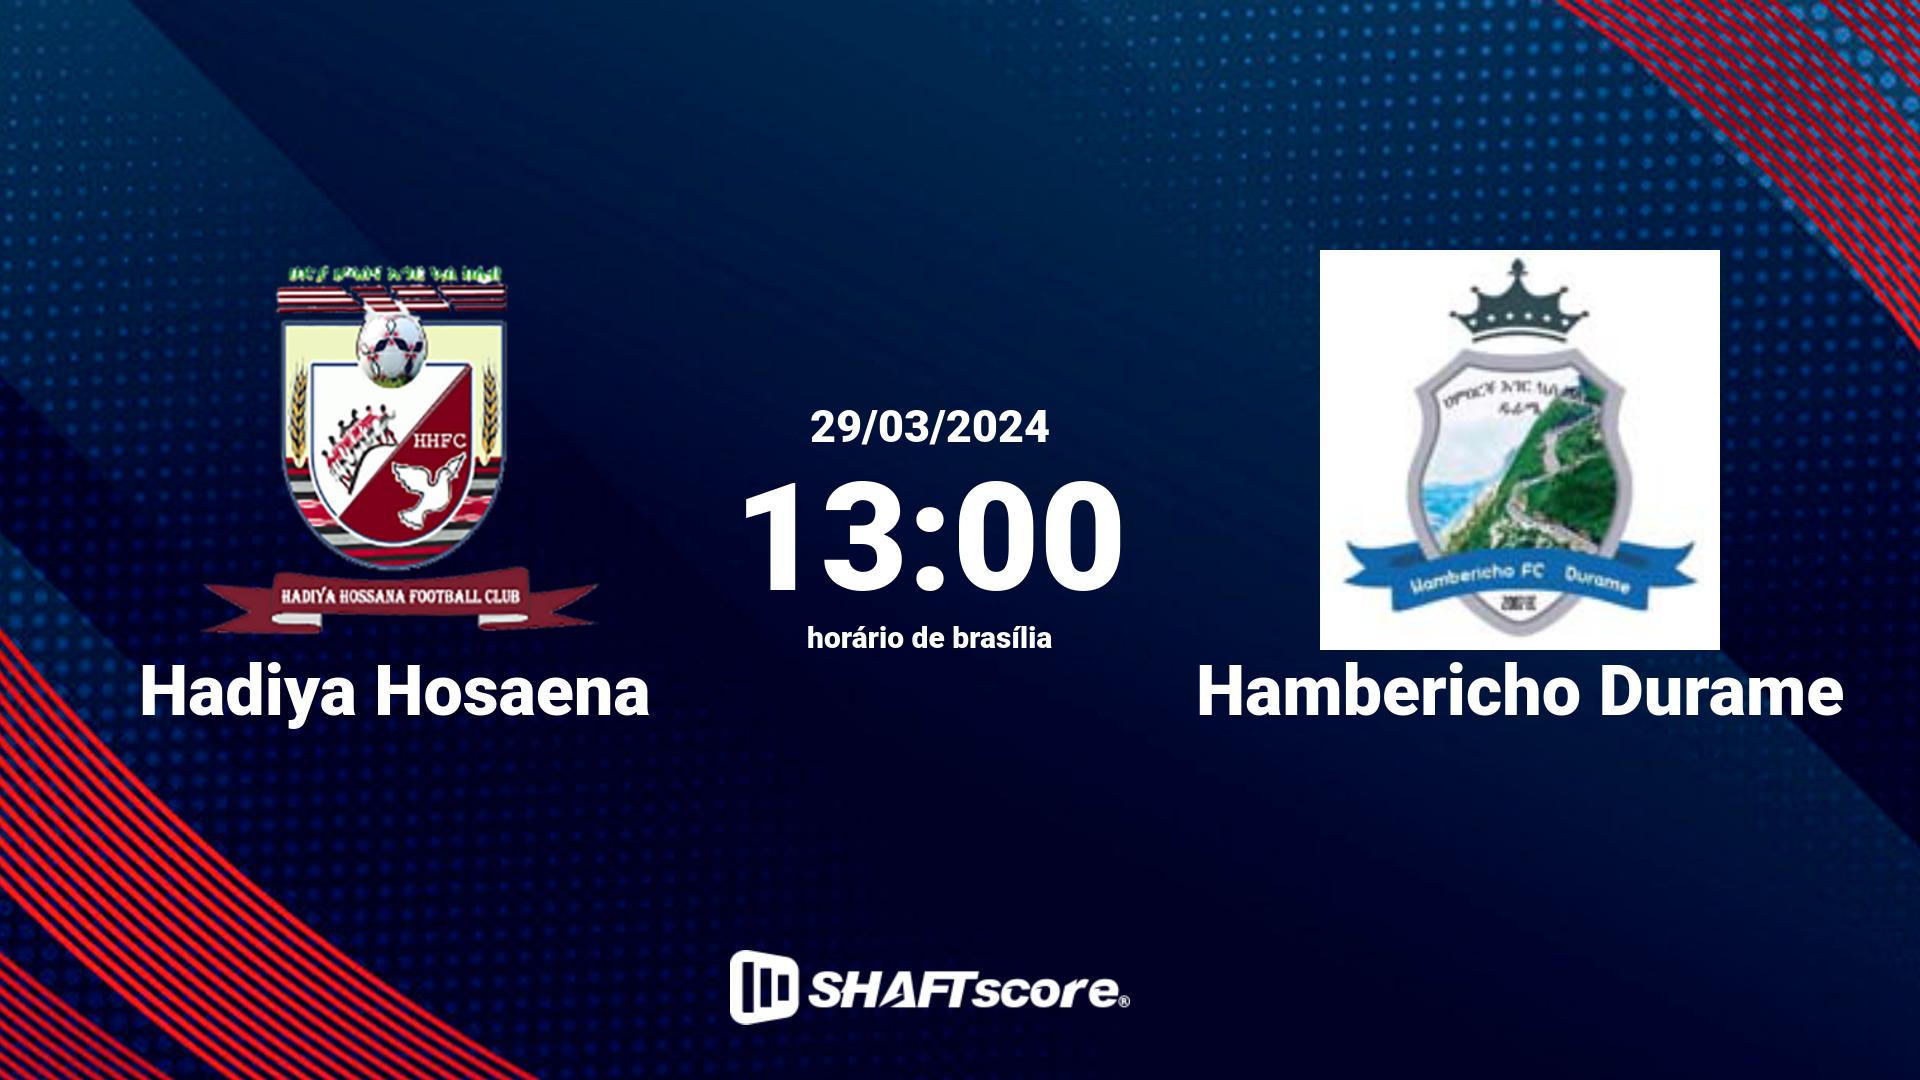 Estatísticas do jogo Hadiya Hosaena vs Hambericho Durame 29.03 13:00